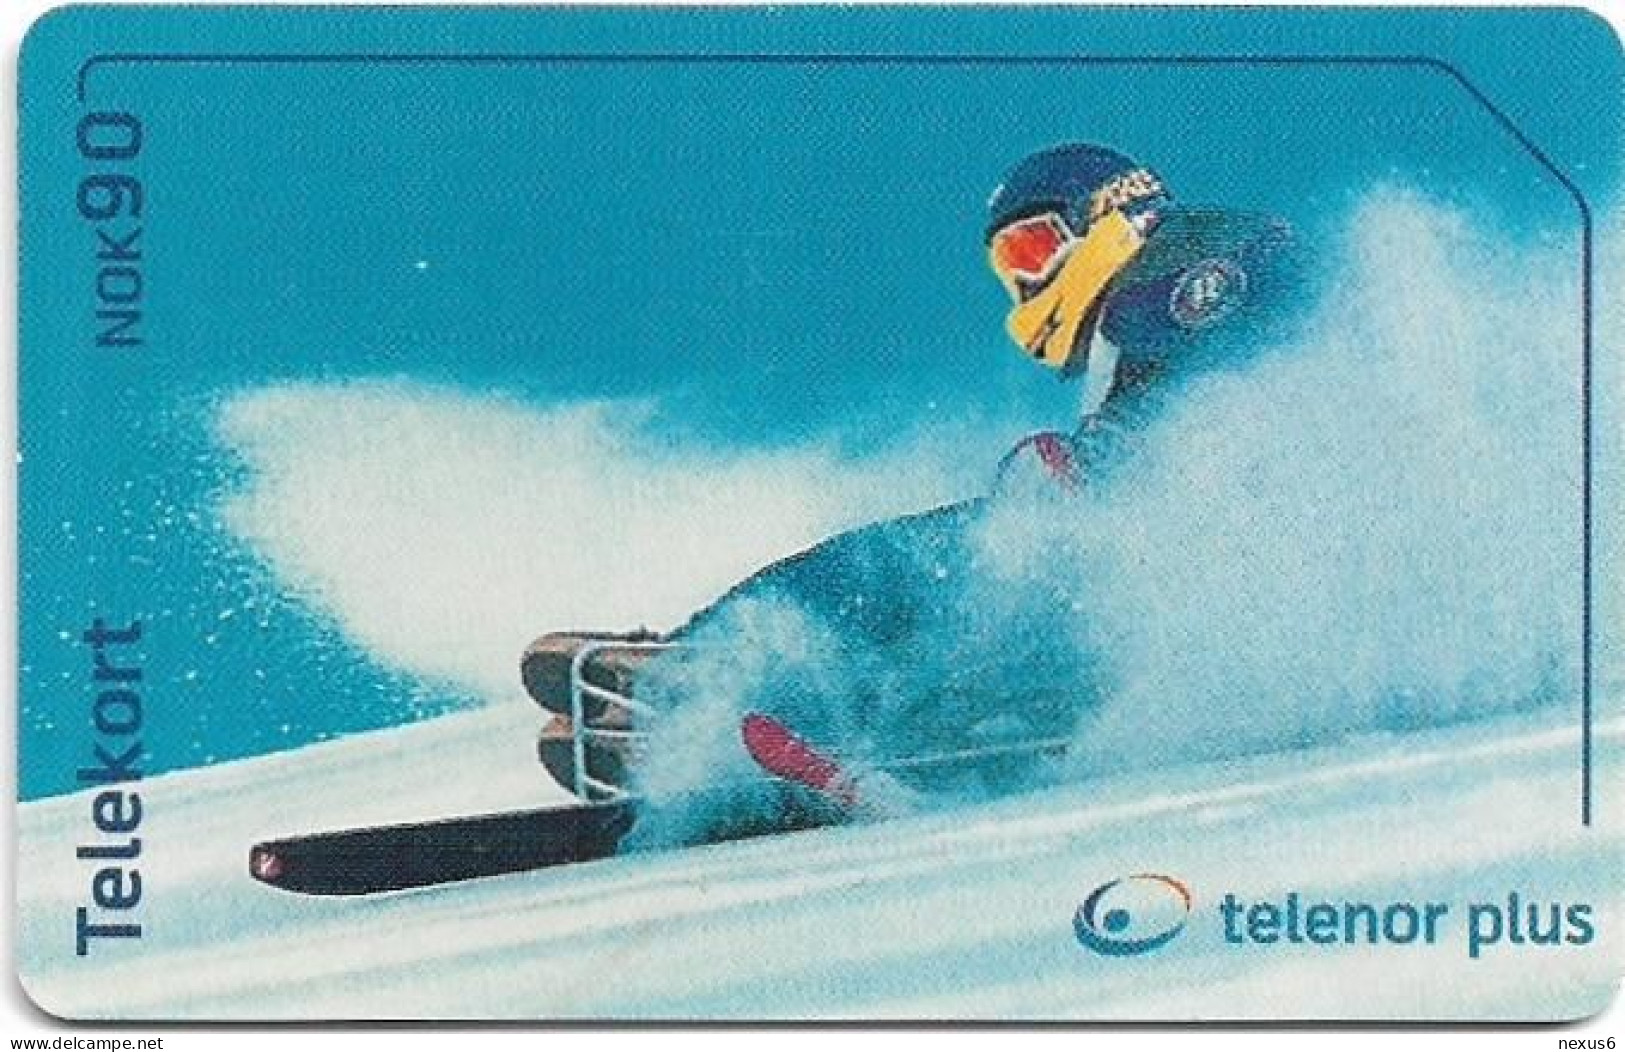 Norway - Telenor - Alpint Snow Ski - N-238 (Cn. 23030 001D6), SC7, 03.2002, 20.000ex, Used - Norwegen